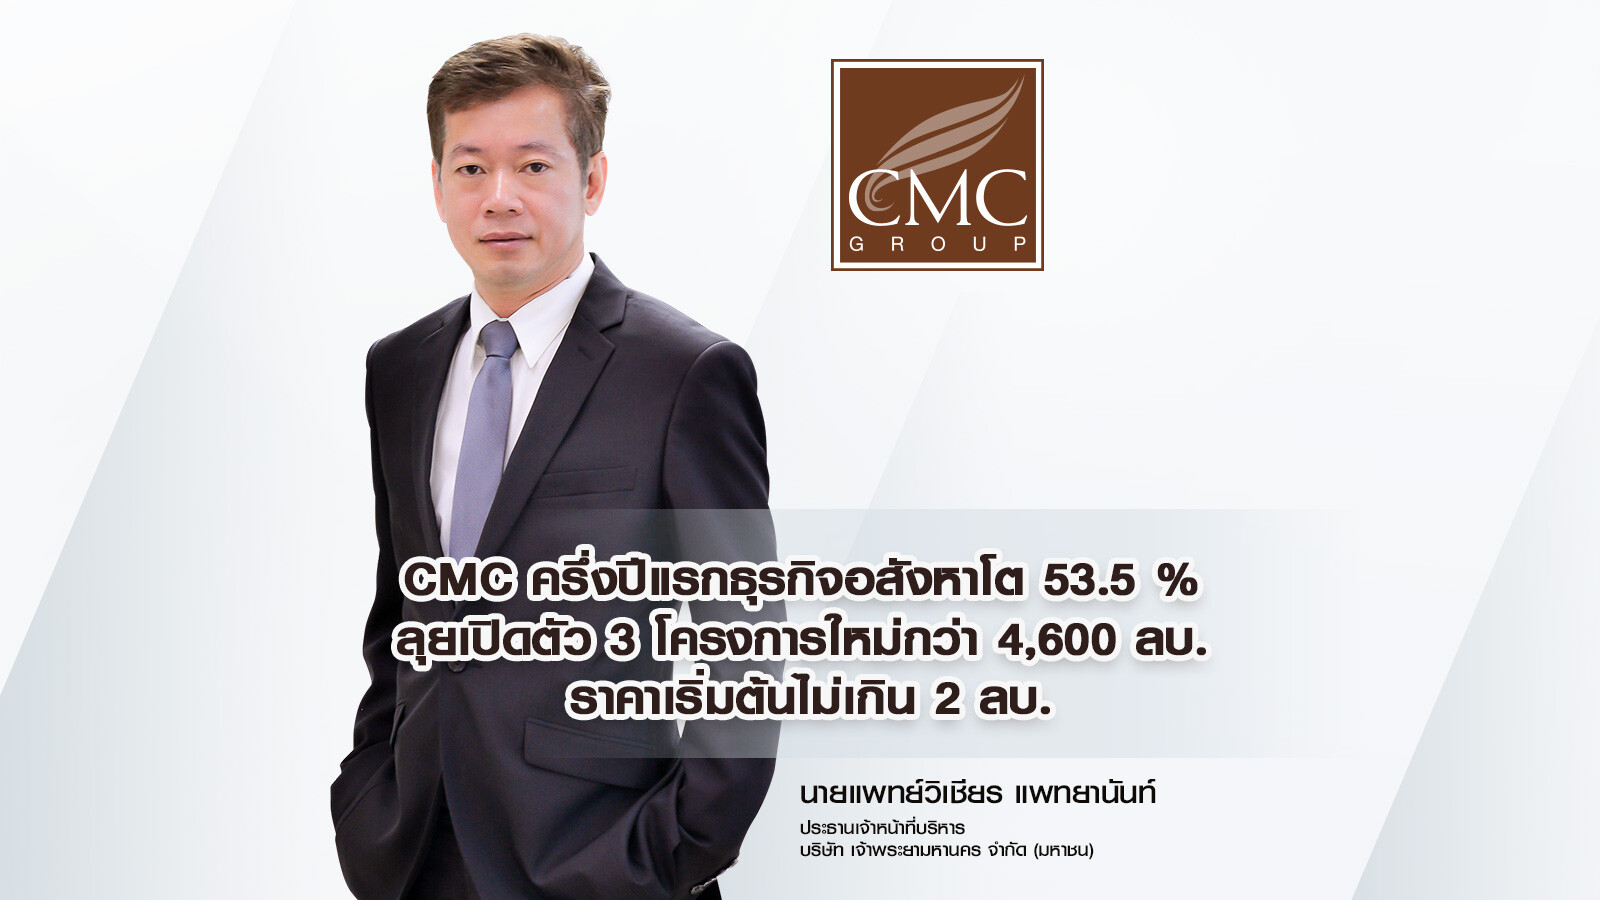 CMC ครึ่งปีแรกธุรกิจอสังหาโต 53.5 % ลุยเปิดตัว 3 โครงการใหม่ กว่า 4,600 ลบ. เน้นตลาดคนรุ่นใหม่ ราคาเข้าถึงง่ายเริ่มต้นไม่เกิน 2 ลบ.